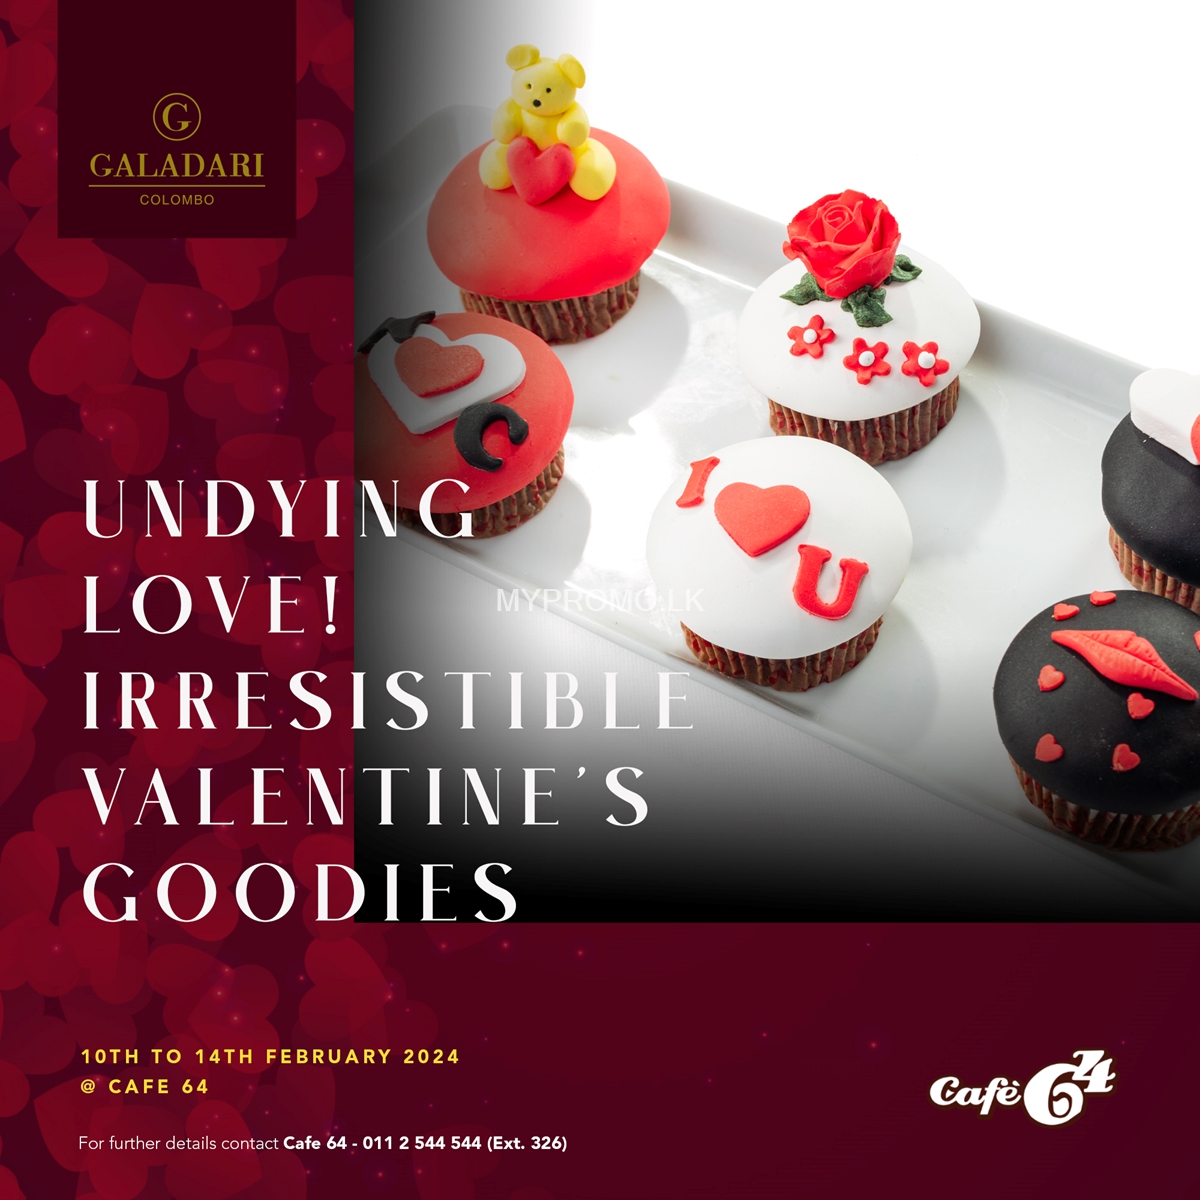 Irresistible Valentine’s Goodies at Galadari Hotel